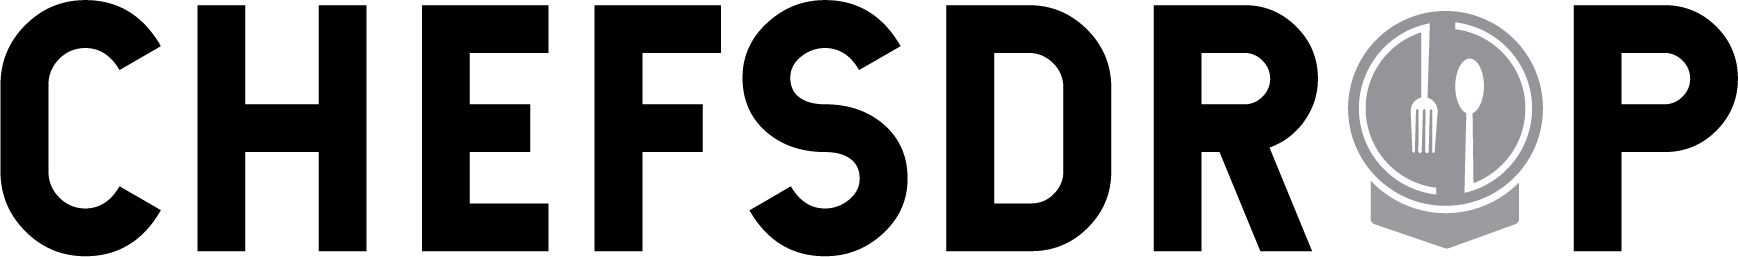 Chefsdrop Logo